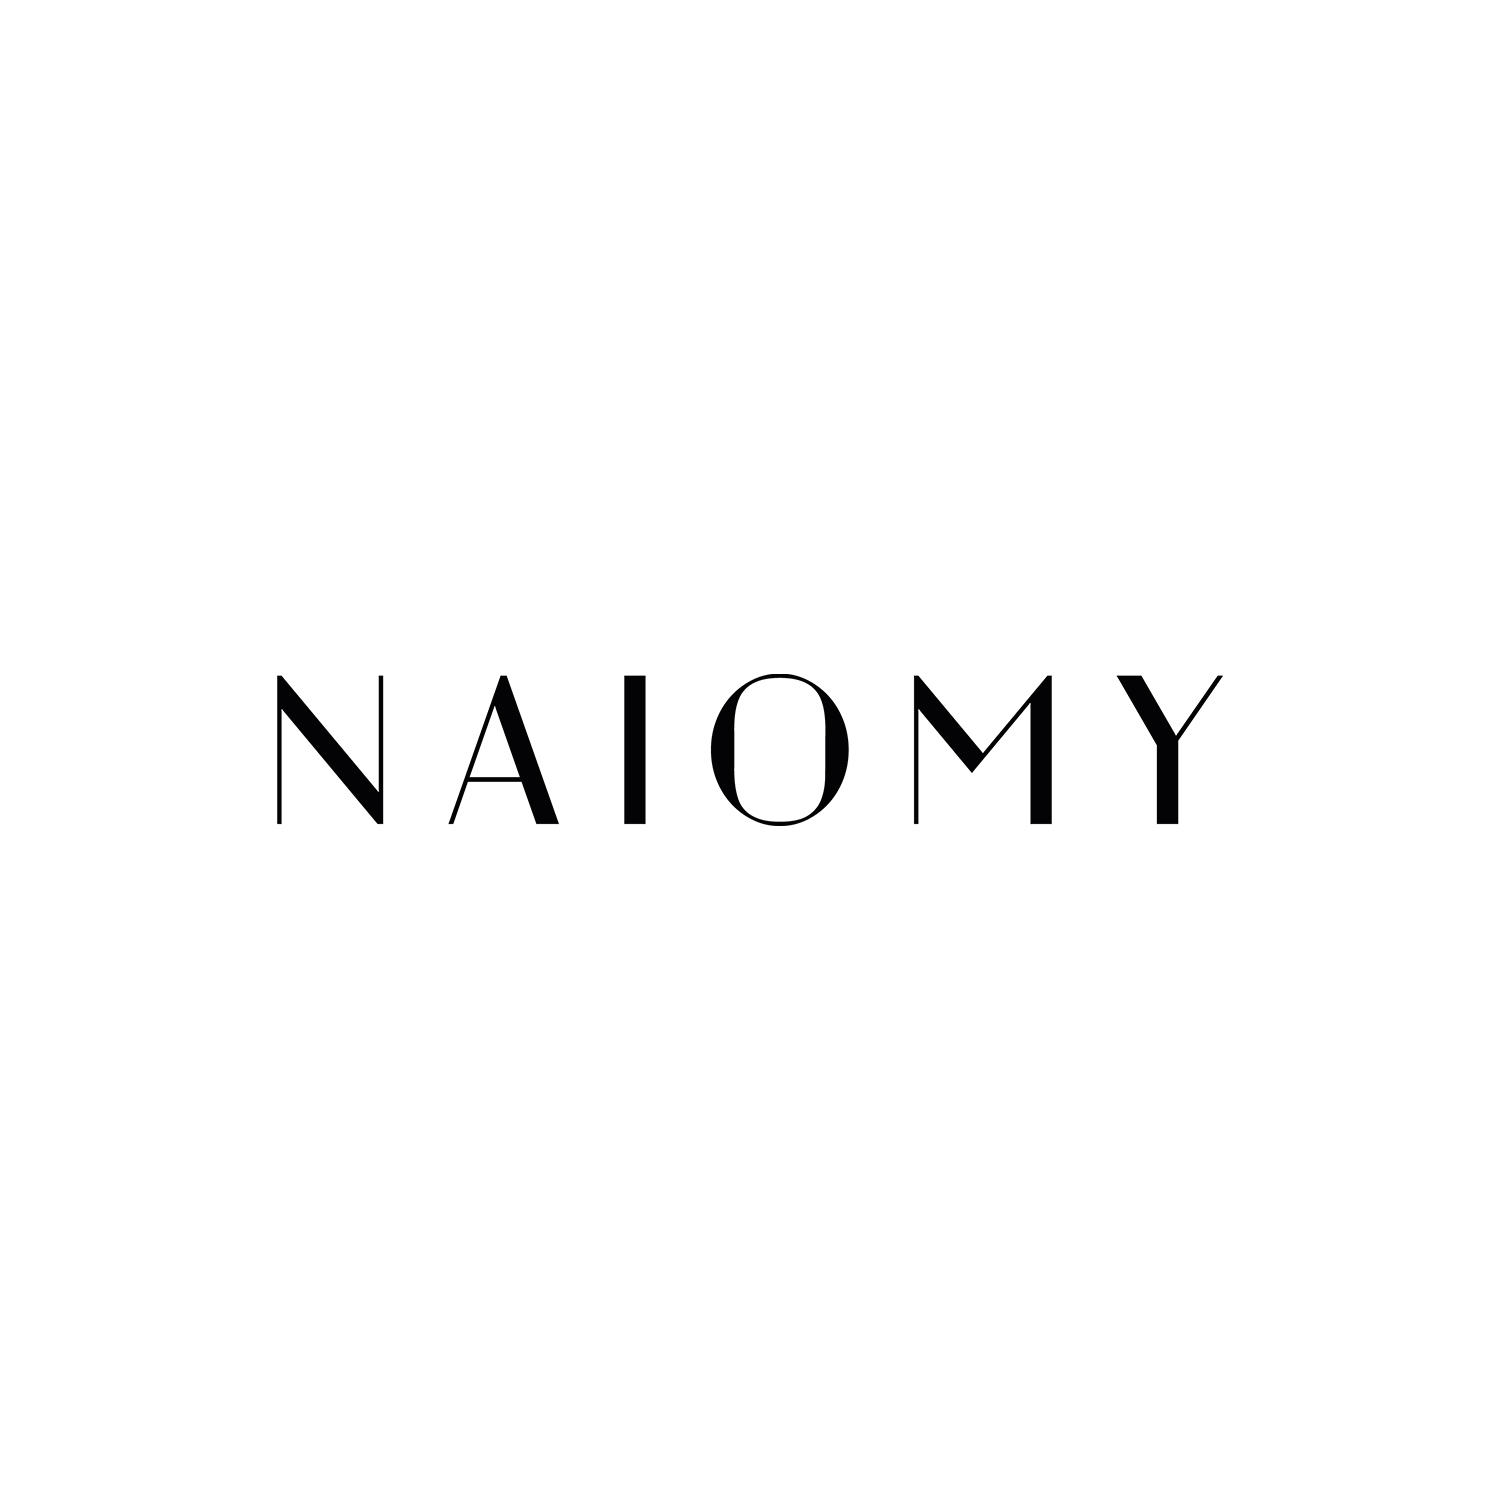 (c) Naiomy.com